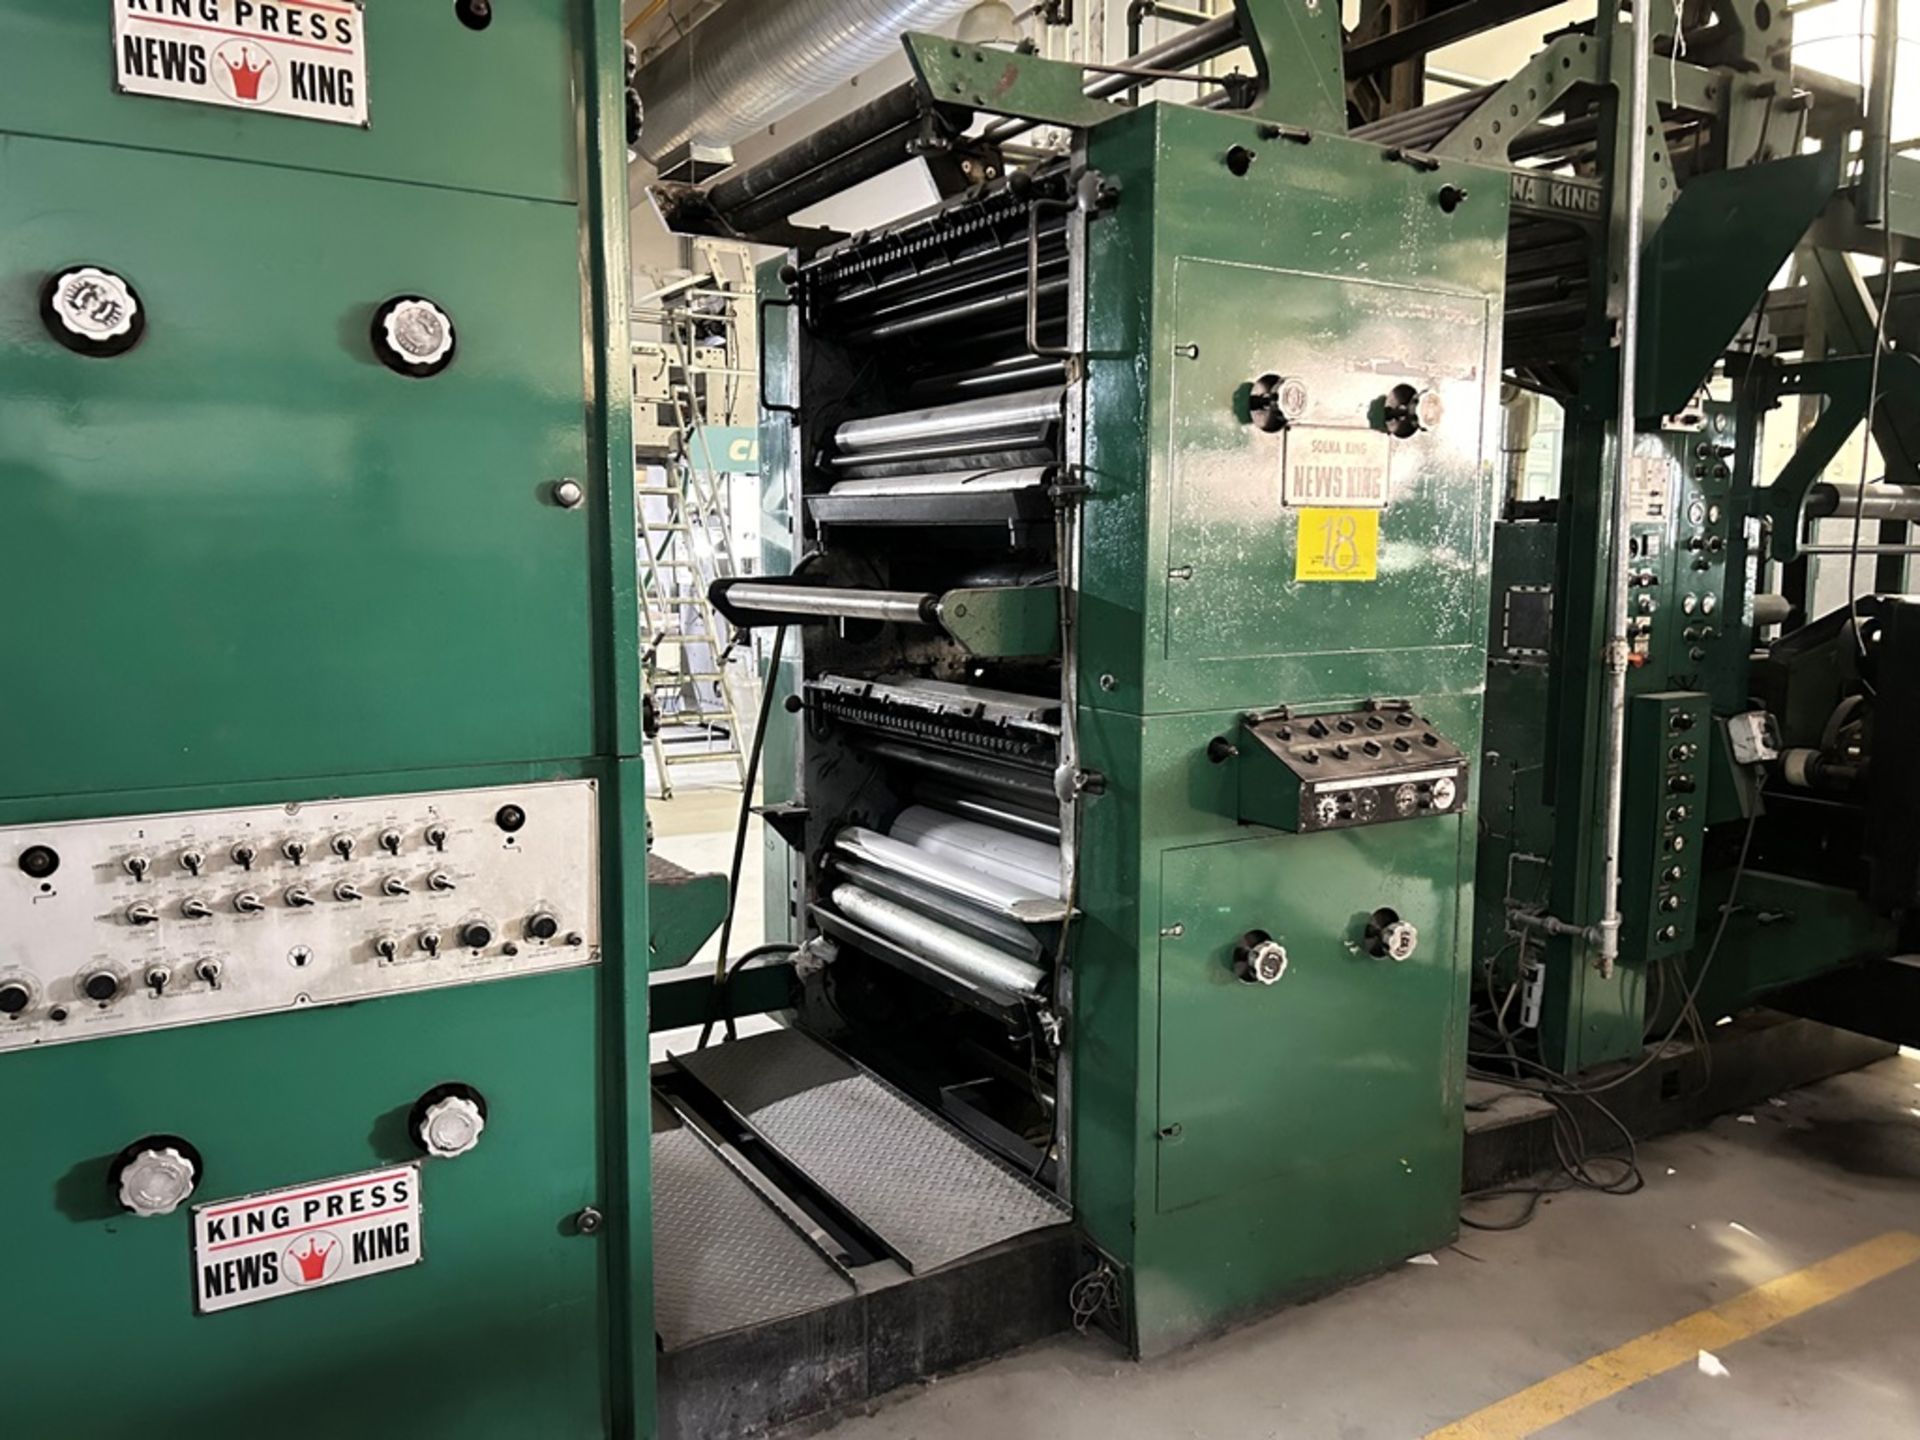 NEWS KING rotary printing machine, Model KING PRESS KJ8, Serial No. P2680-1.F21C2-9-89 CM-1000, Yea - Image 13 of 14